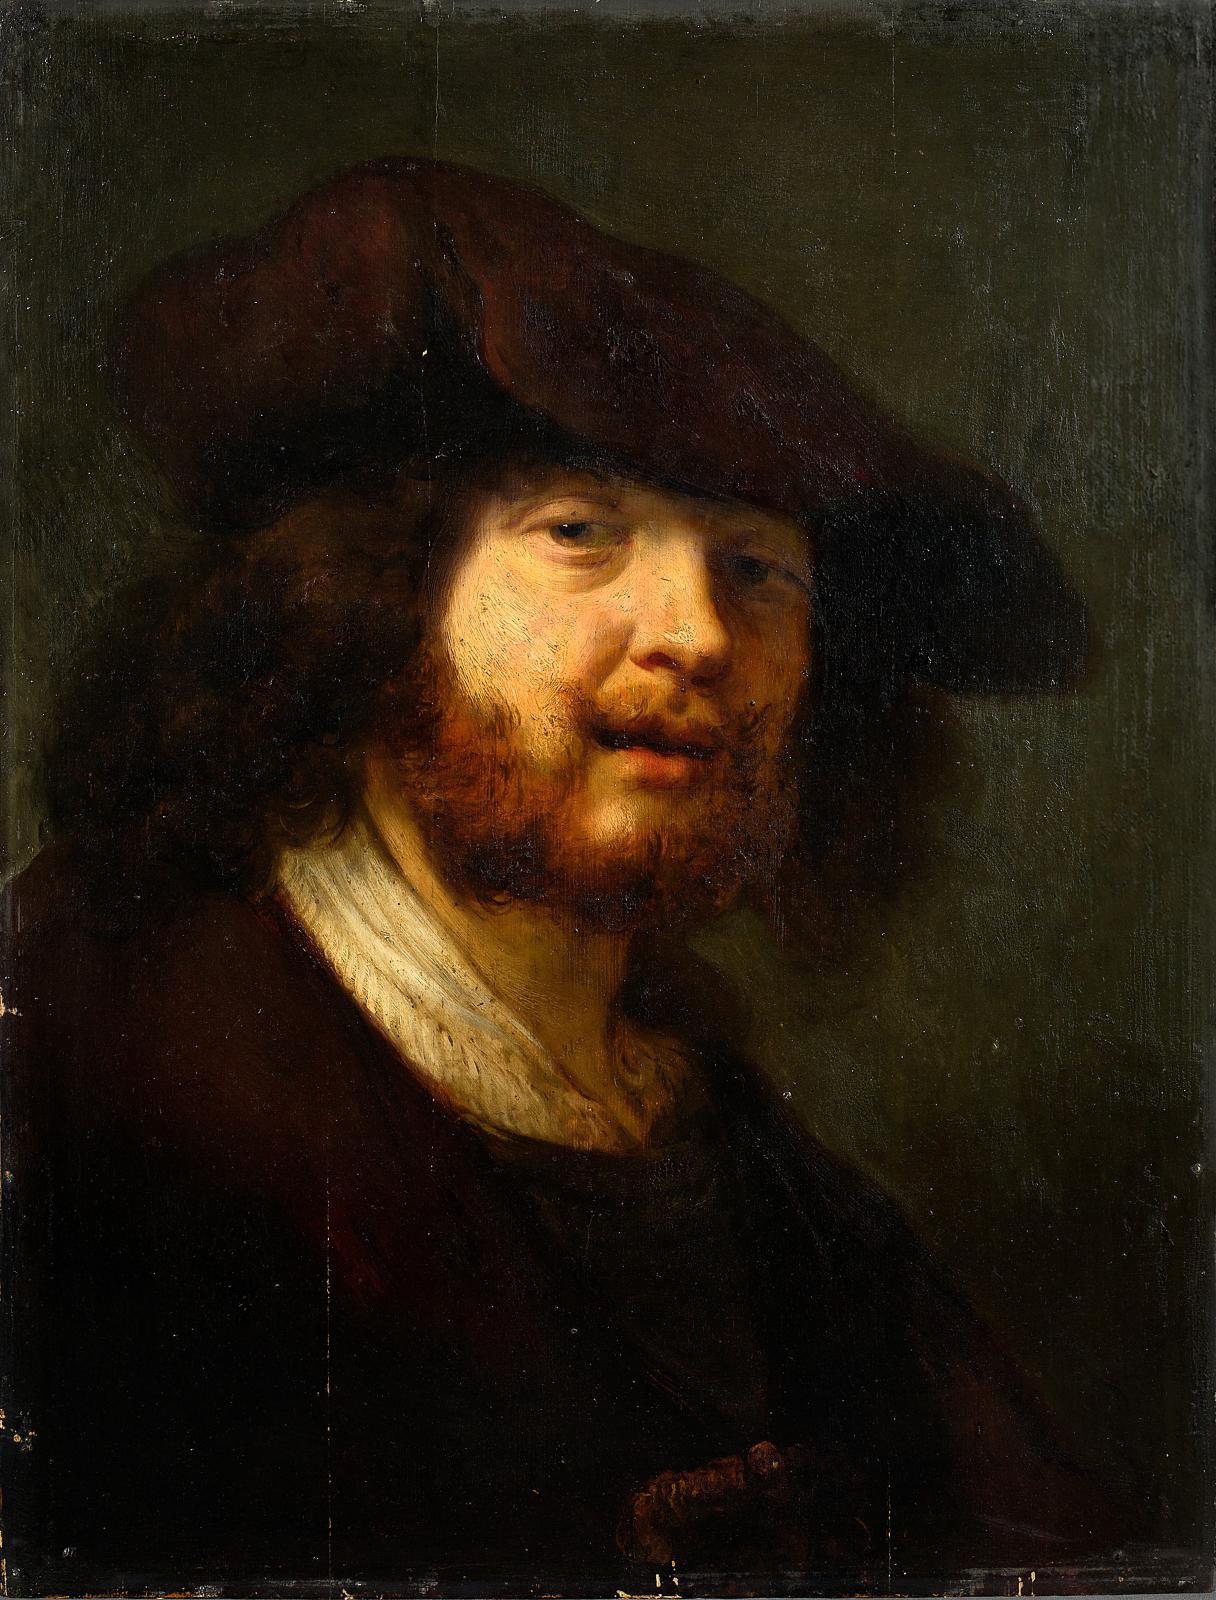 Rembrandt’s Century